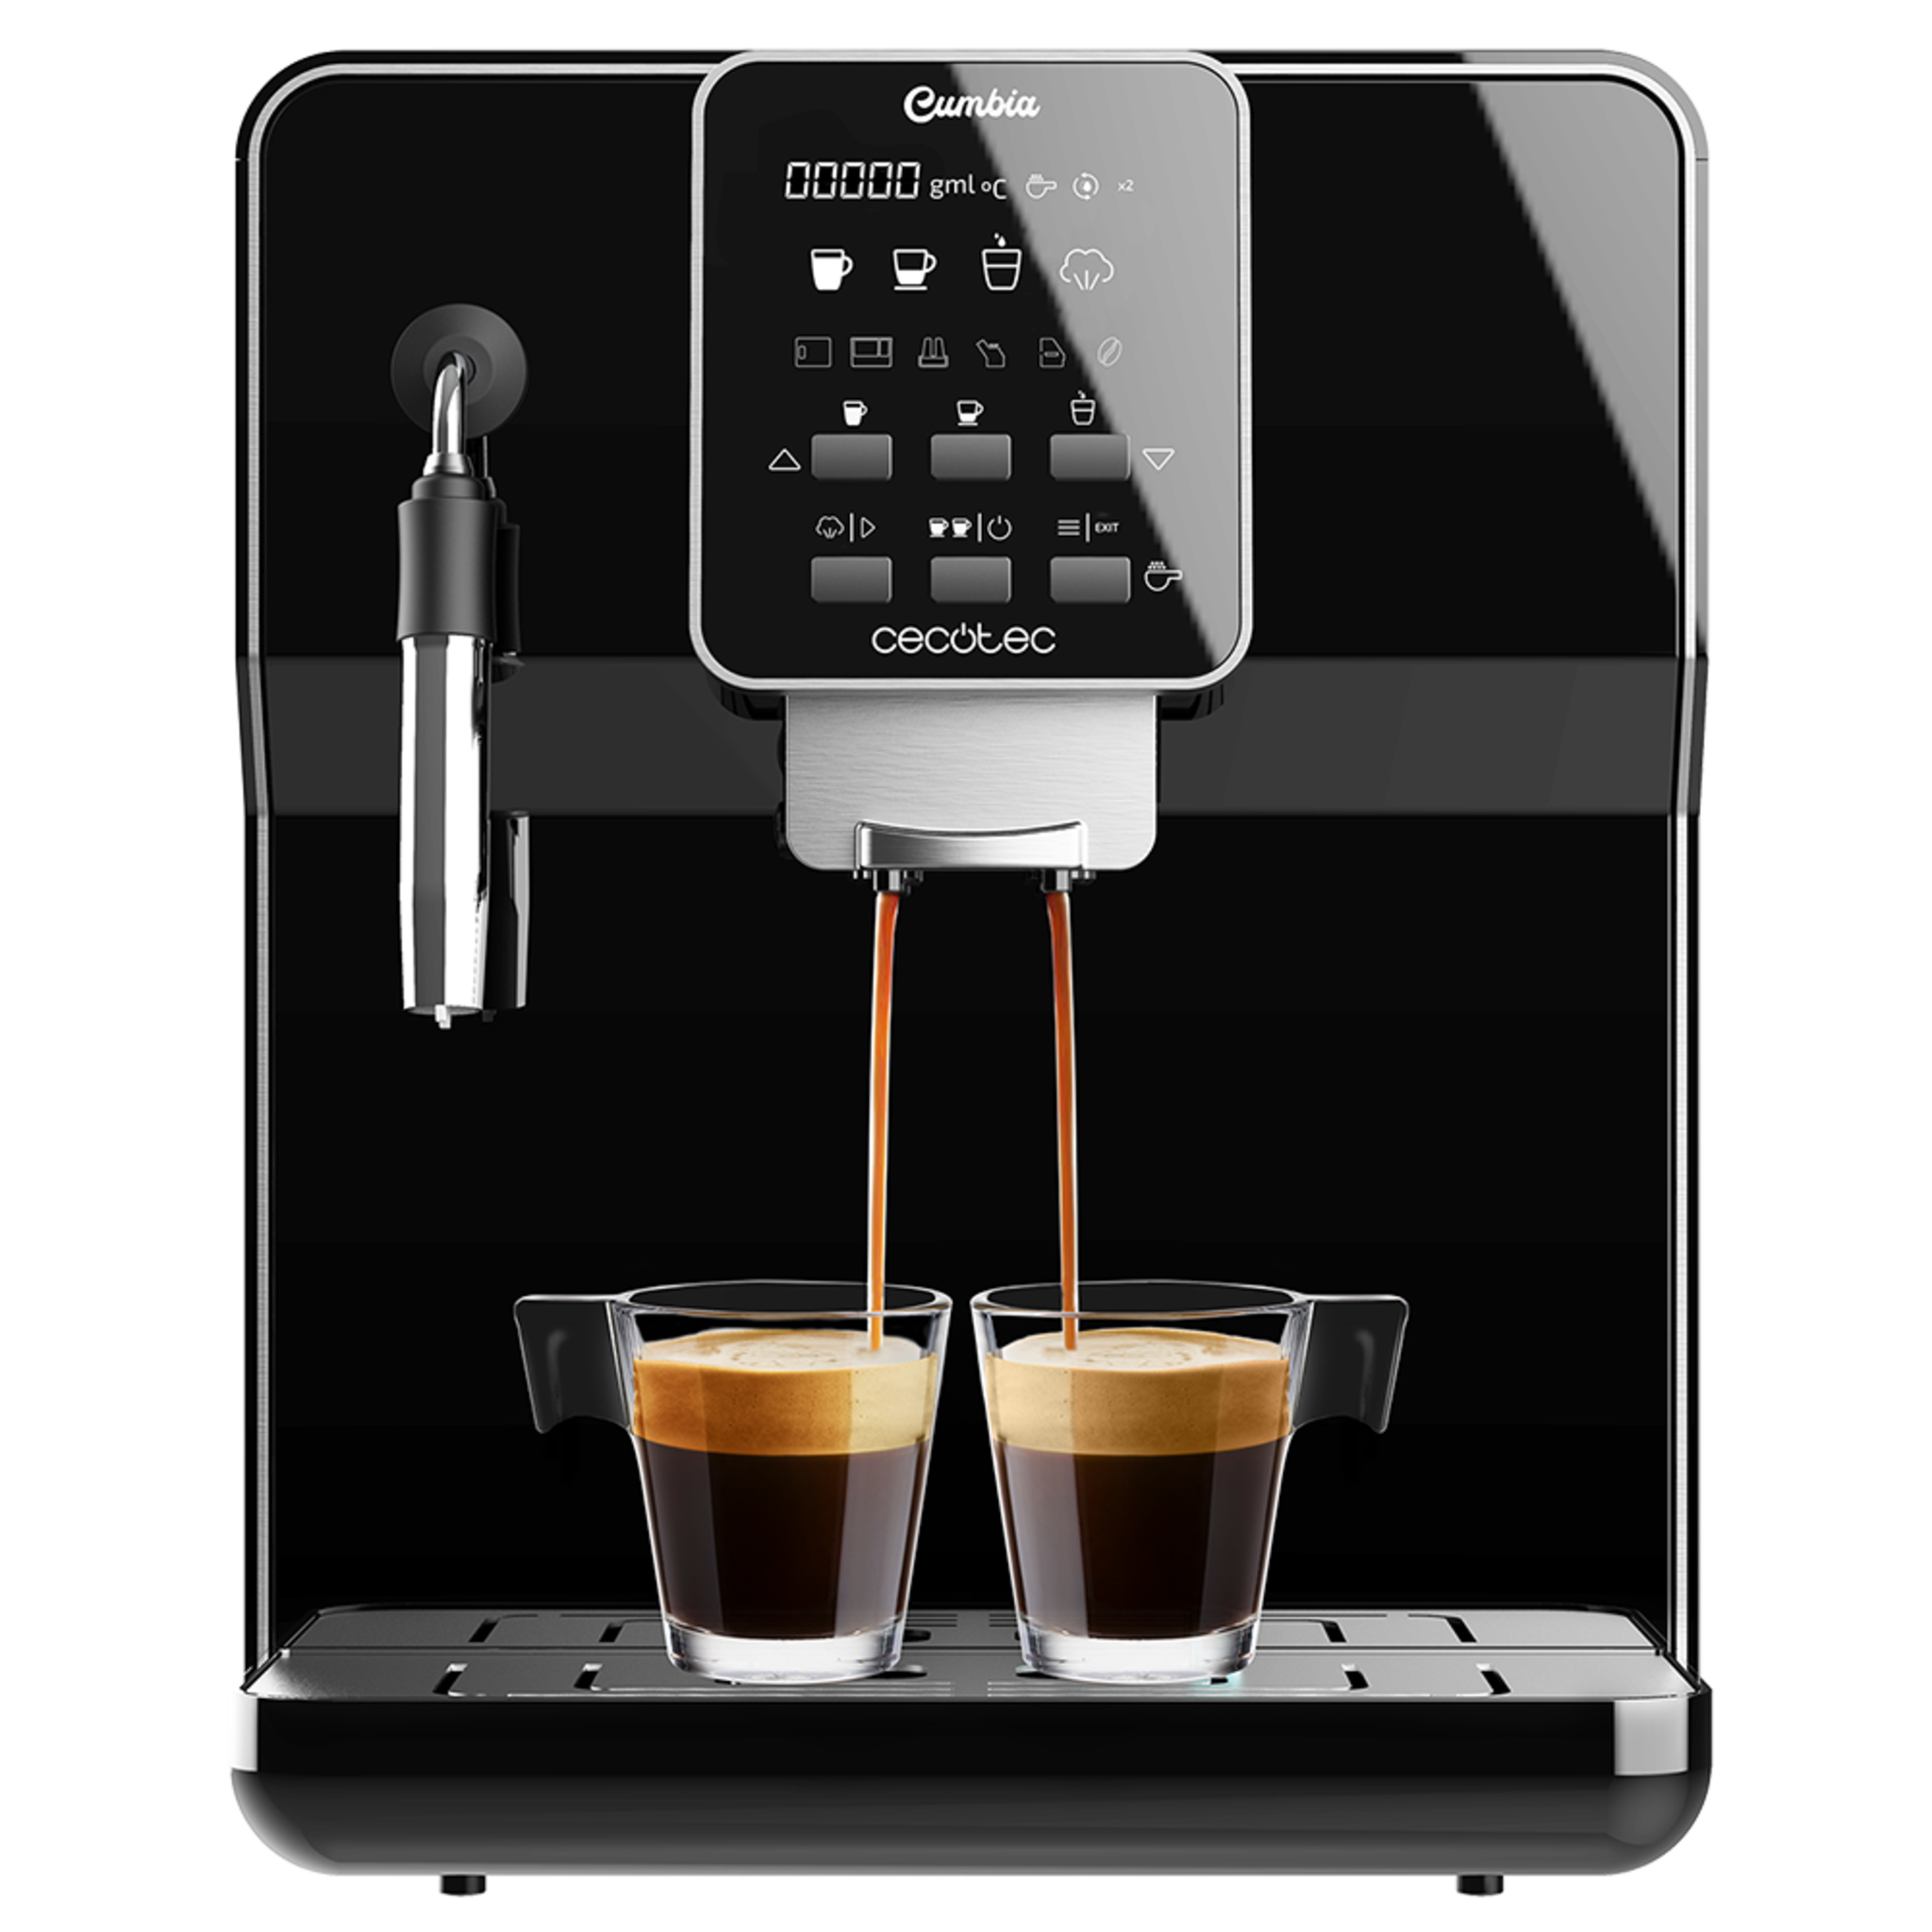 cafetera megautomática Power Matic-ccino 6000 Serie Nera. 19 Bares,1-2 cafés, Sistema de rápido Calentamiento, Pantalla LCD, depósito café 250 gr, Molinillo Integrado, 1350 W